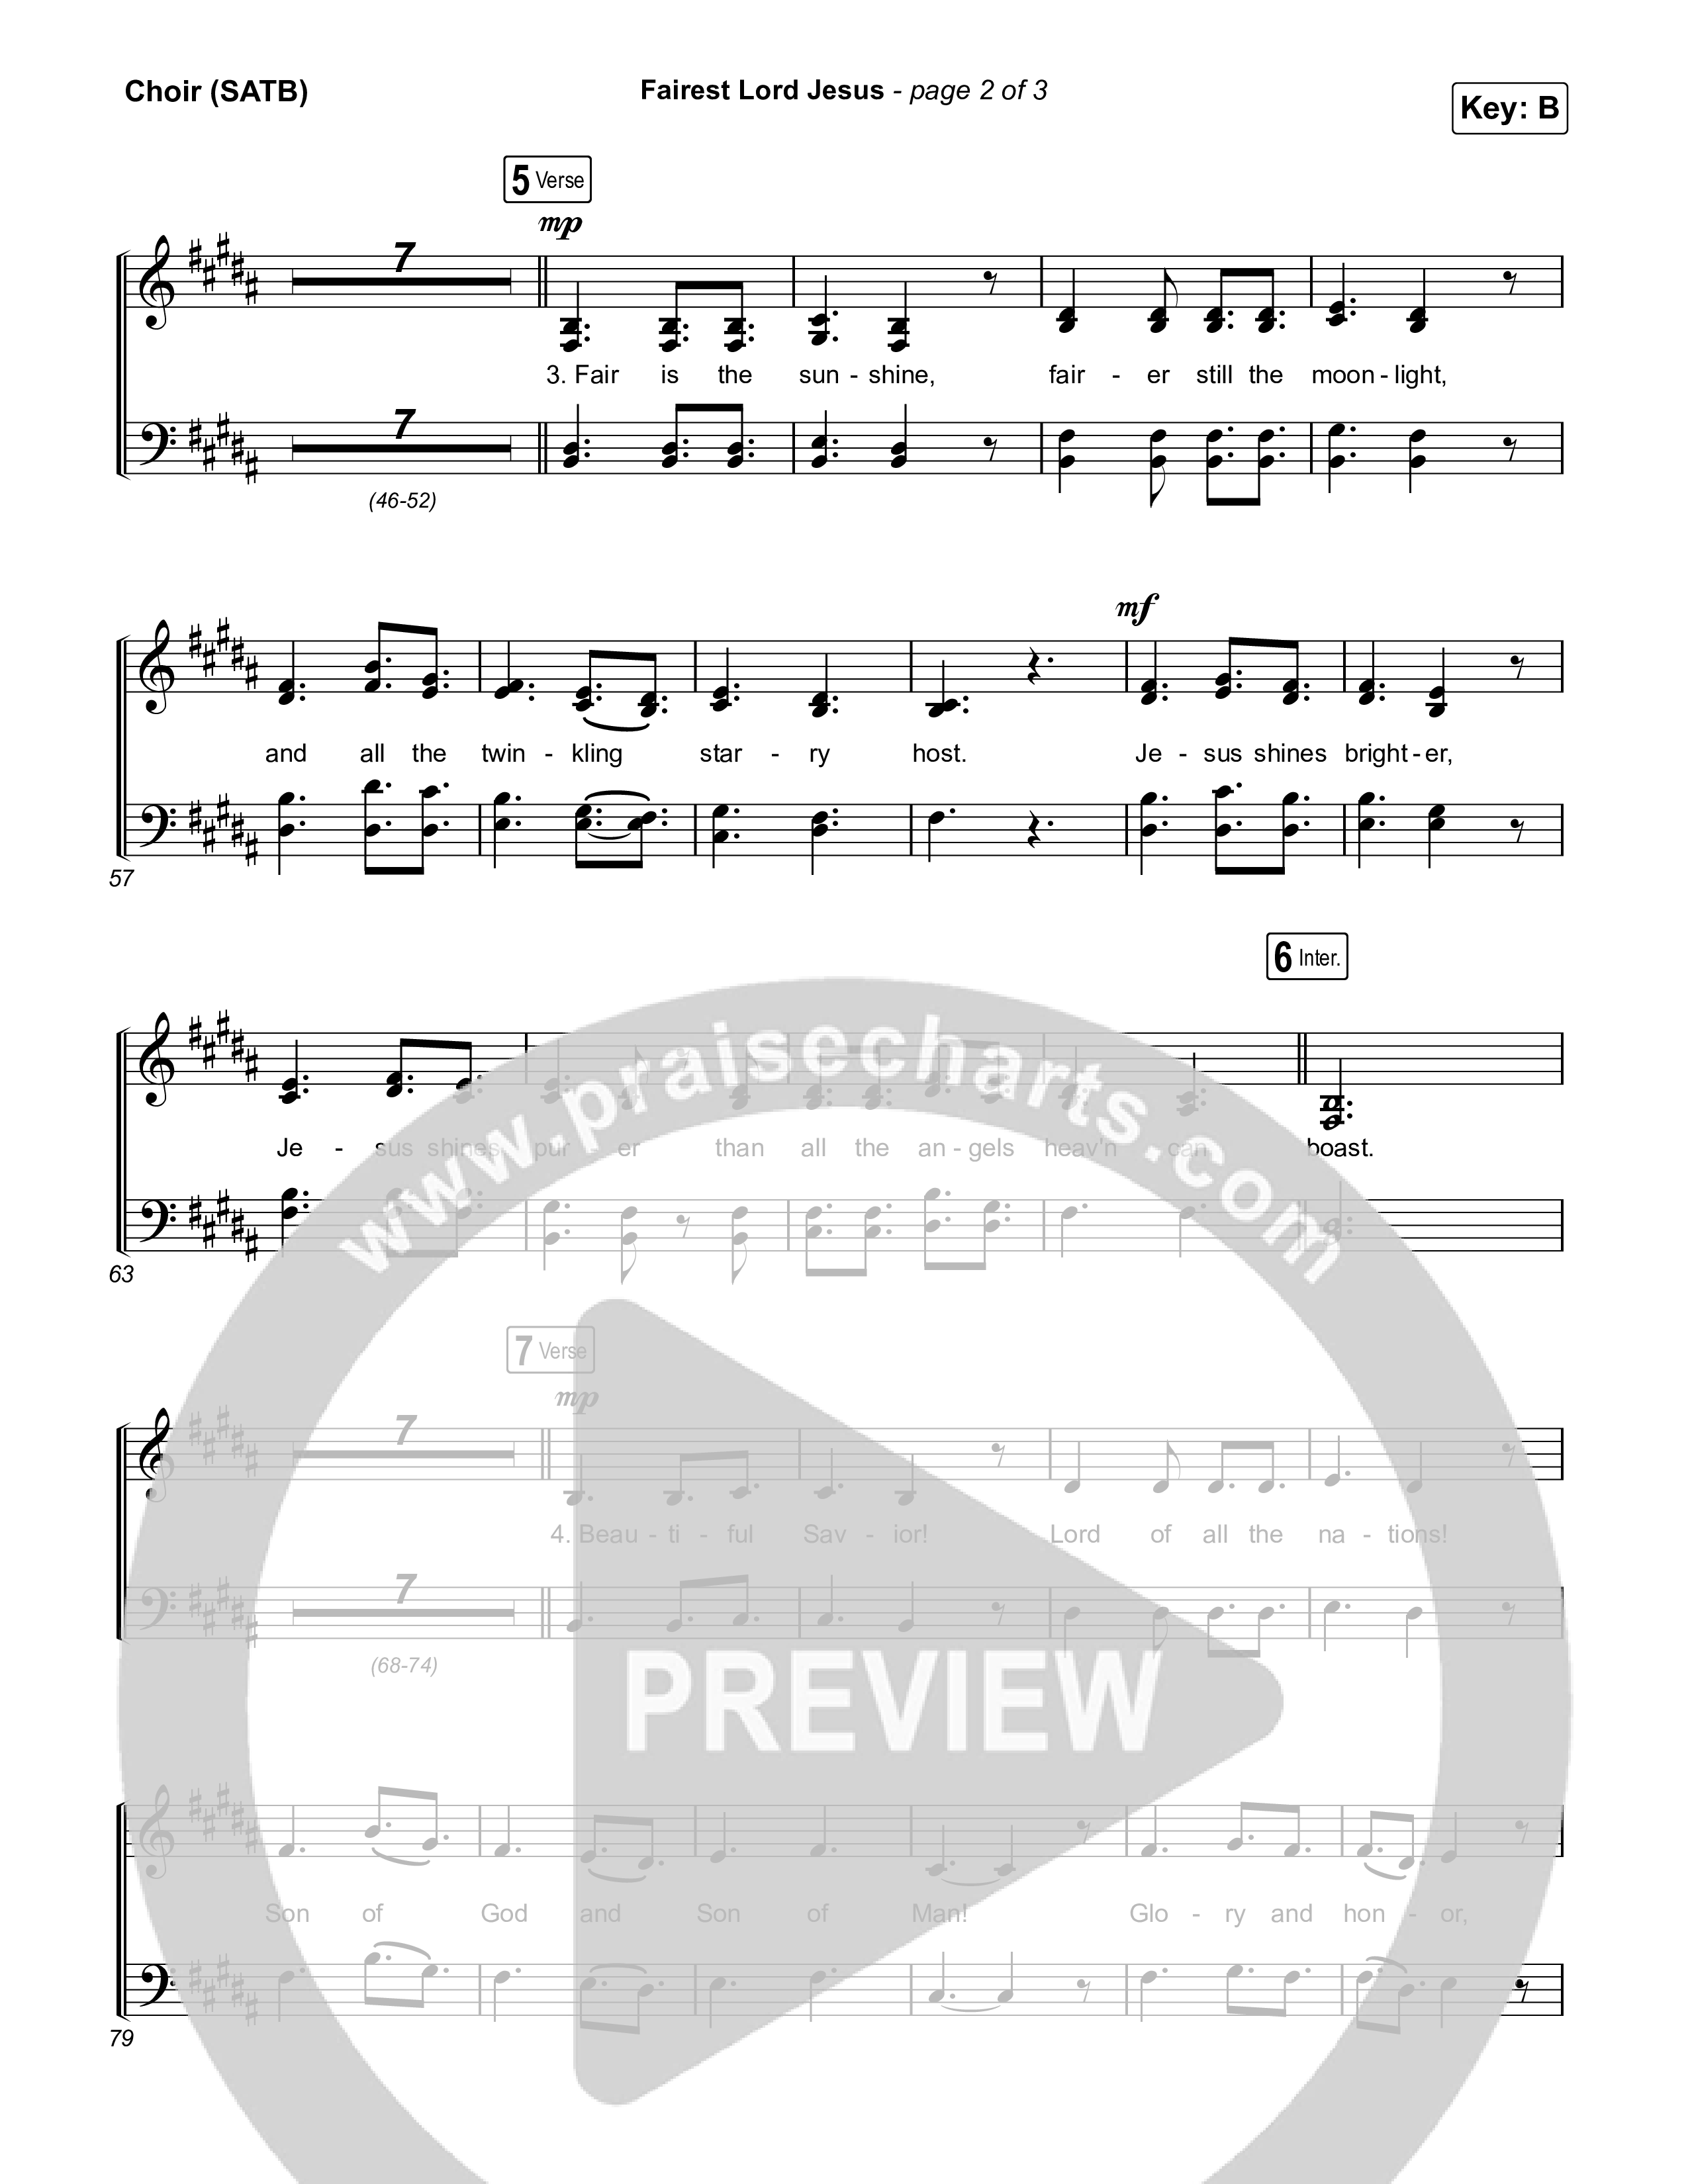 Fairest Lord Jesus Choir Sheet (SATB) (The Worship Initiative)